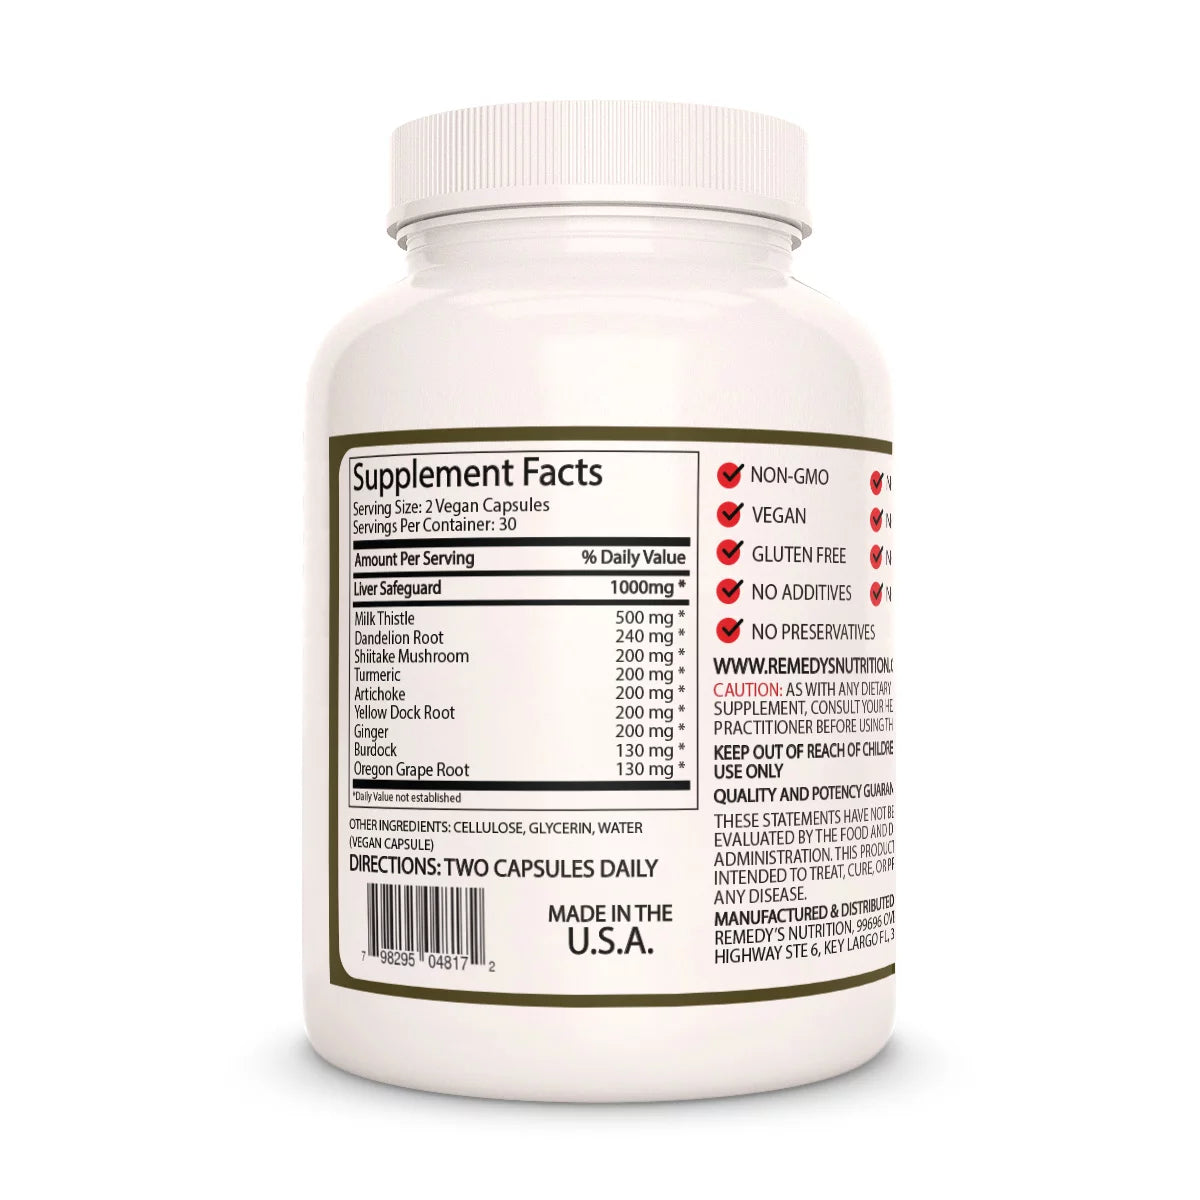 Image of Remedy's Nutrition® Liver Safeguard™ back bottle label. Supplement Facts Ingredients Milk Thistle Dandelion Shiitake